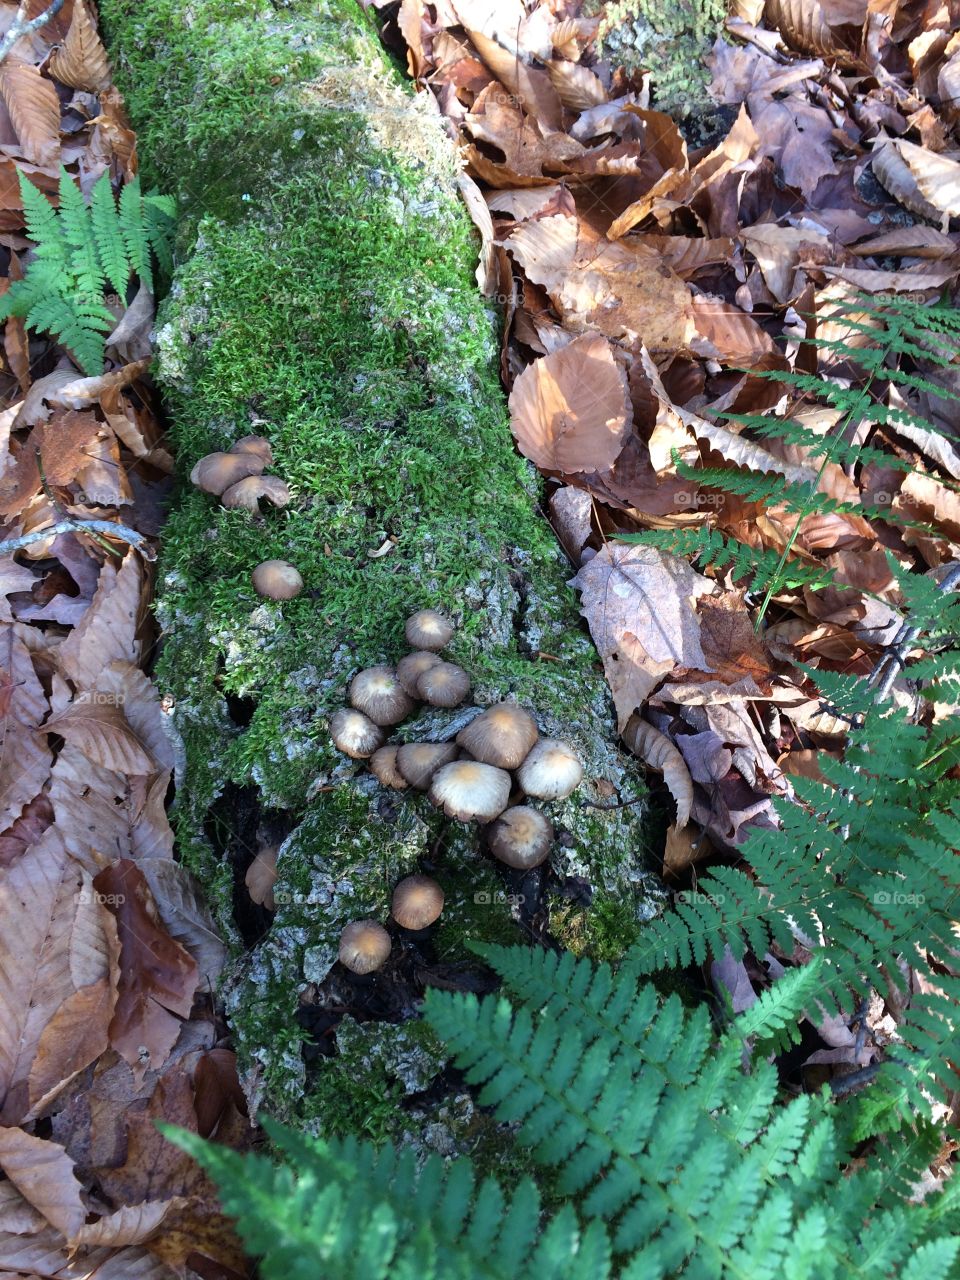 Mushrooms on a dead log on the forest floor